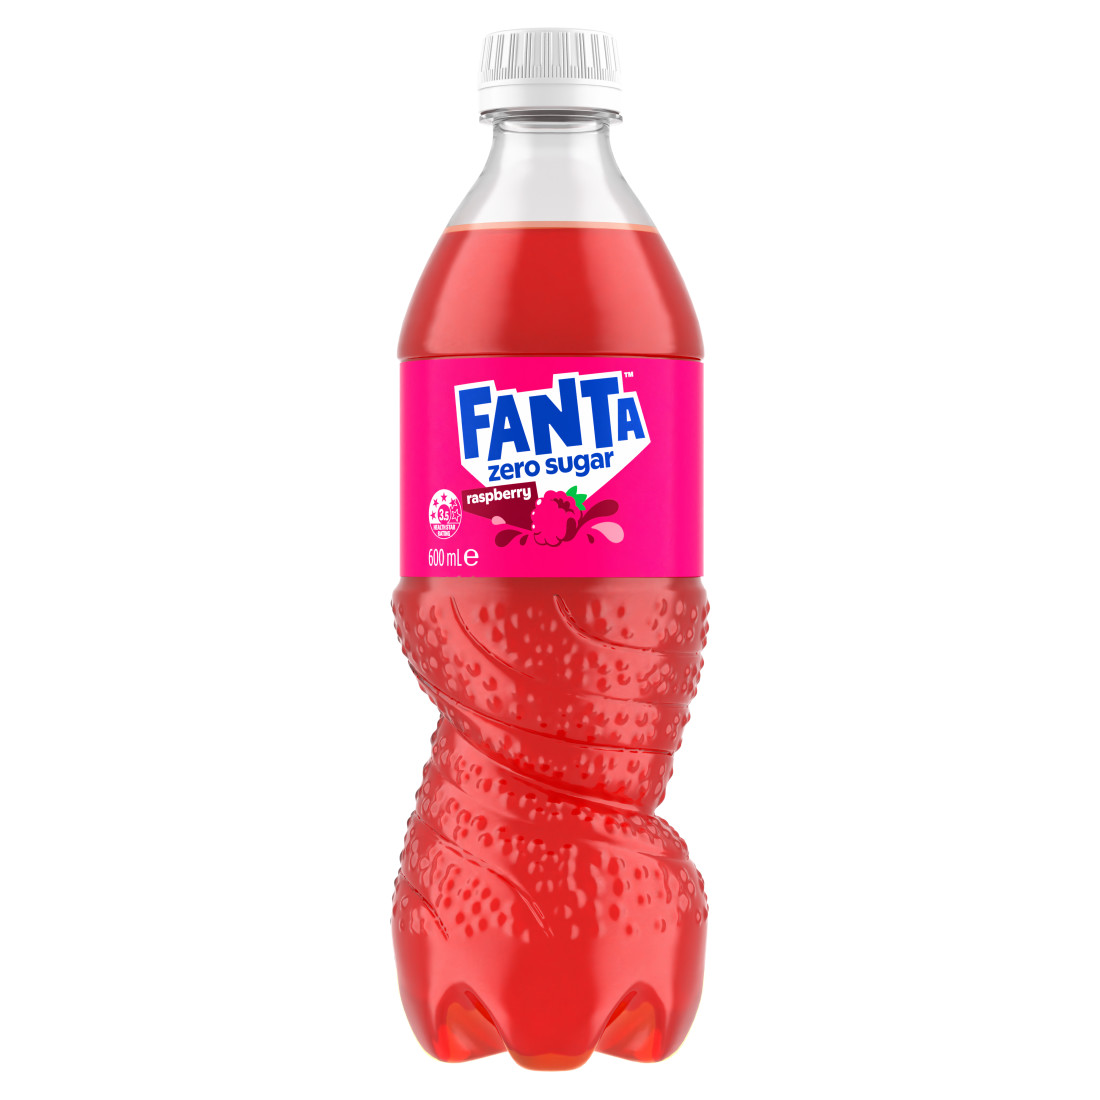 Fanta No Sugar bottle